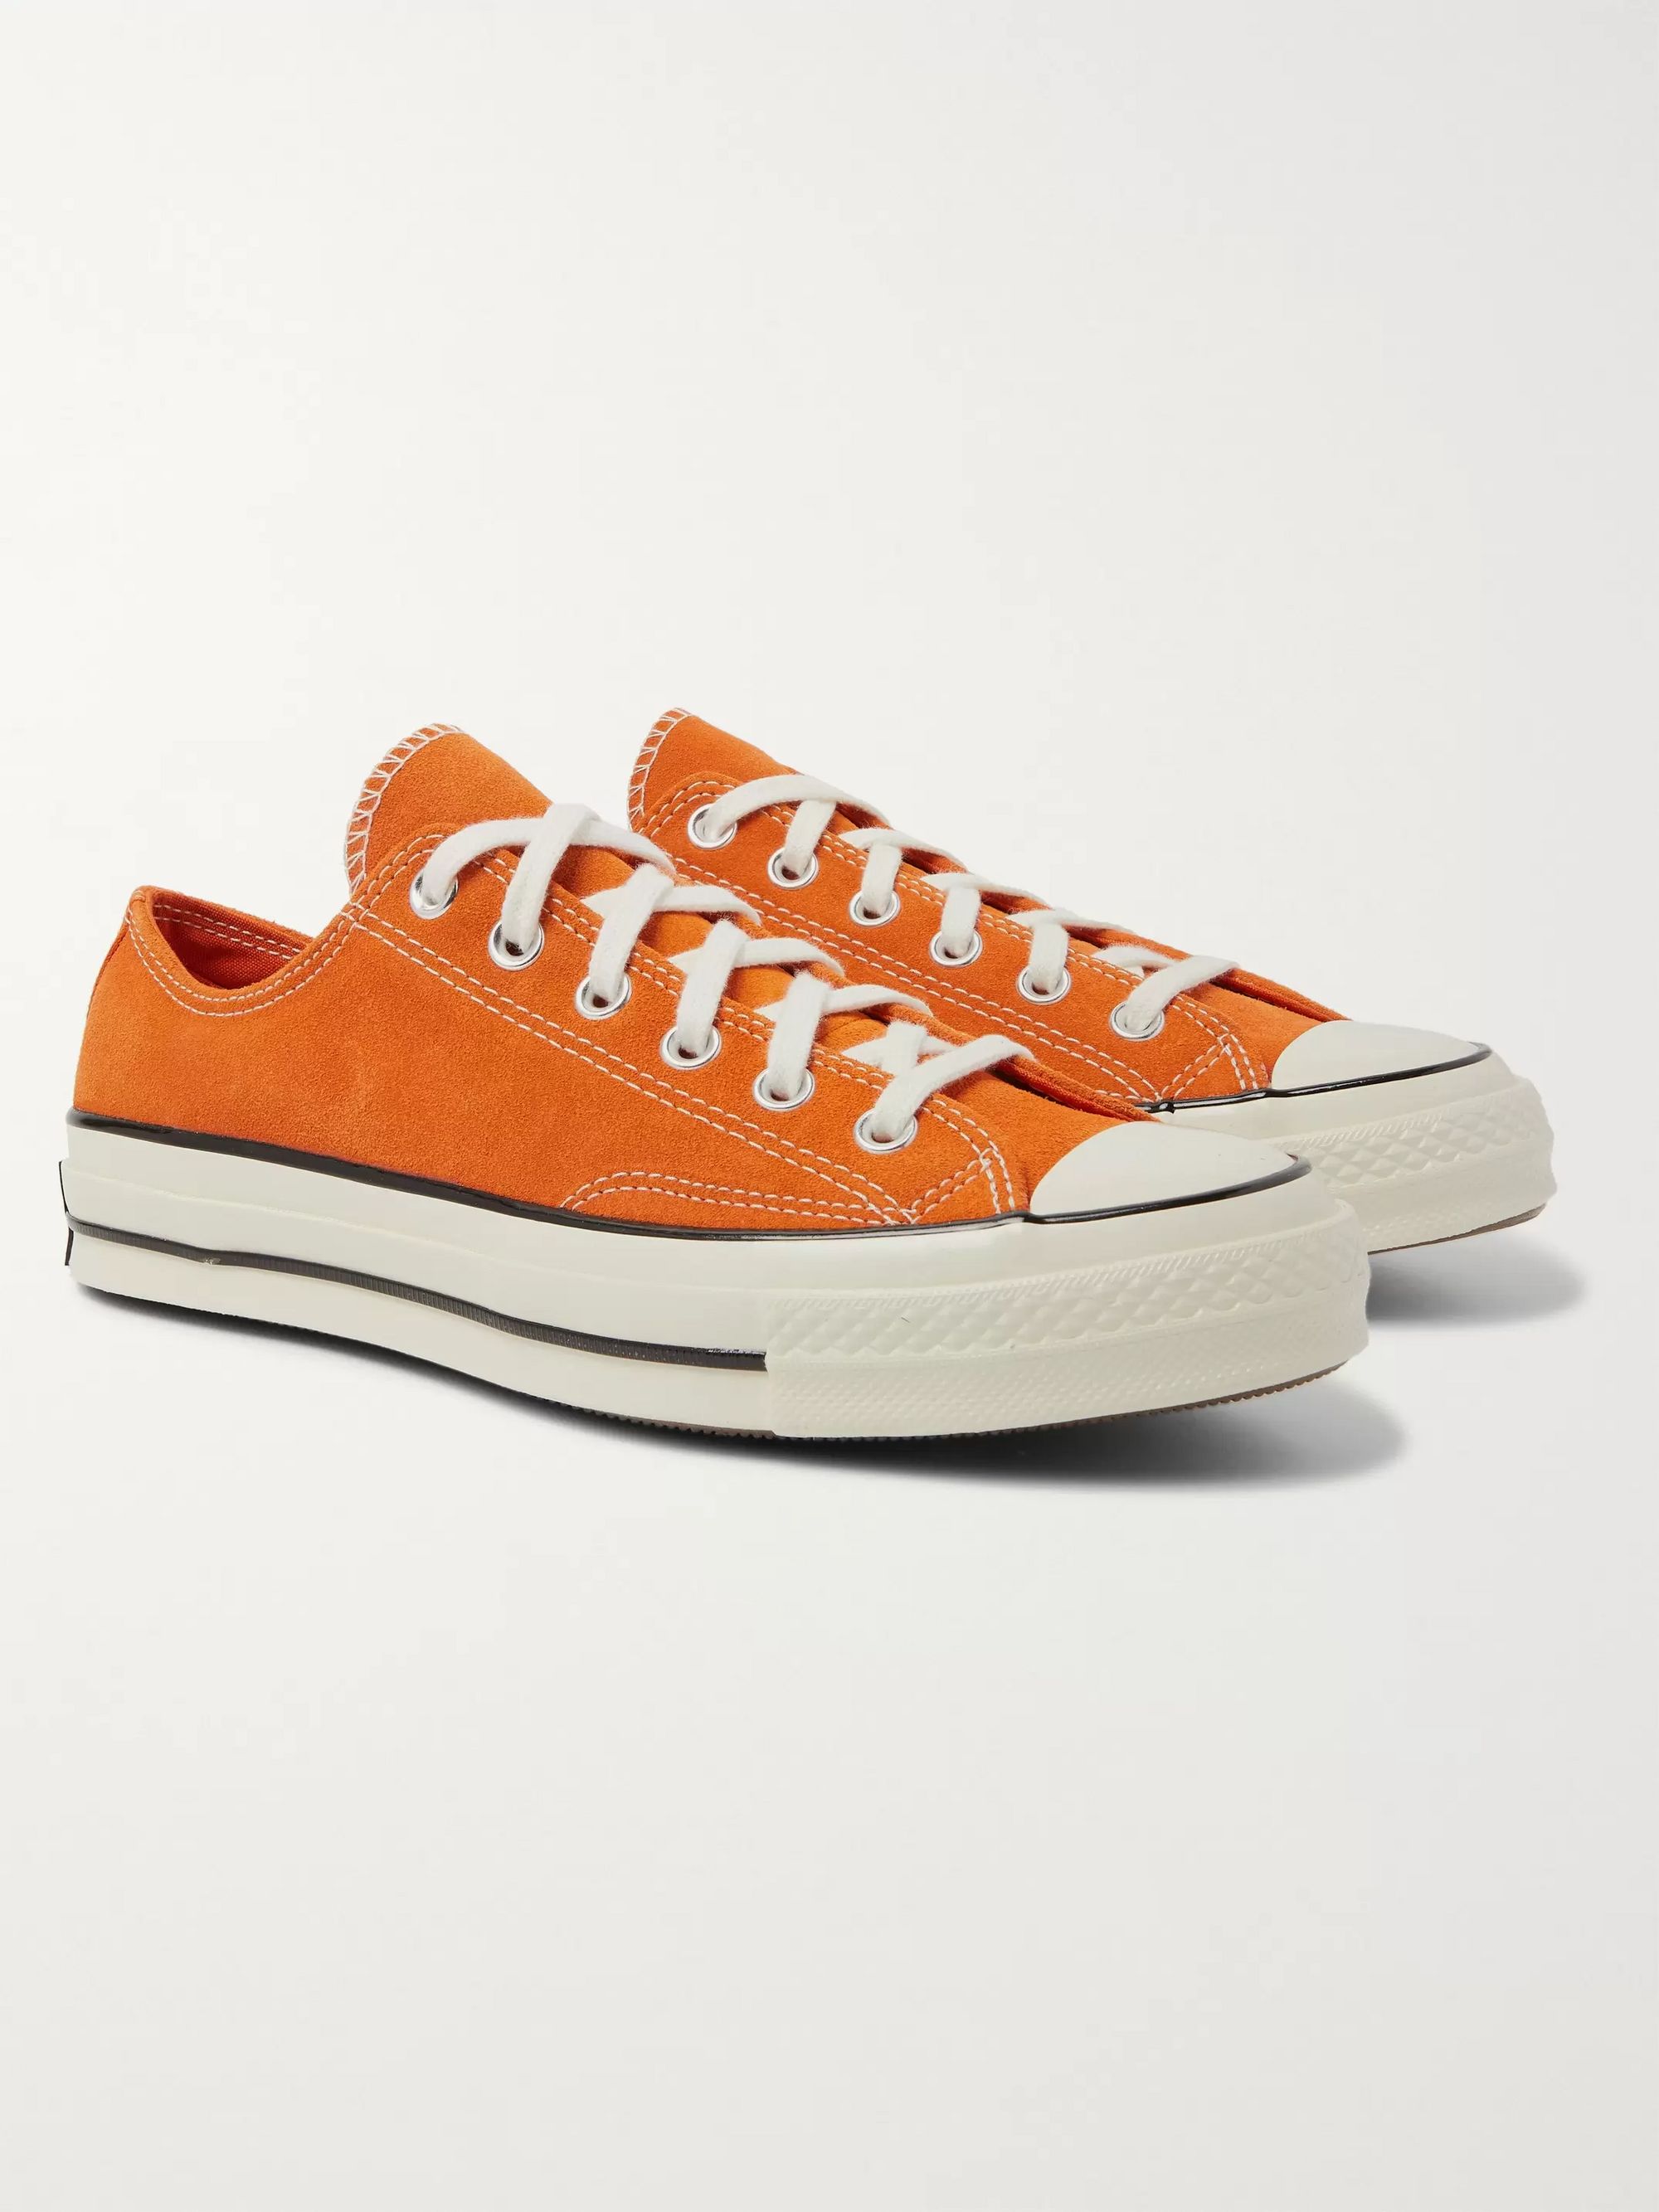 orange and grey converse